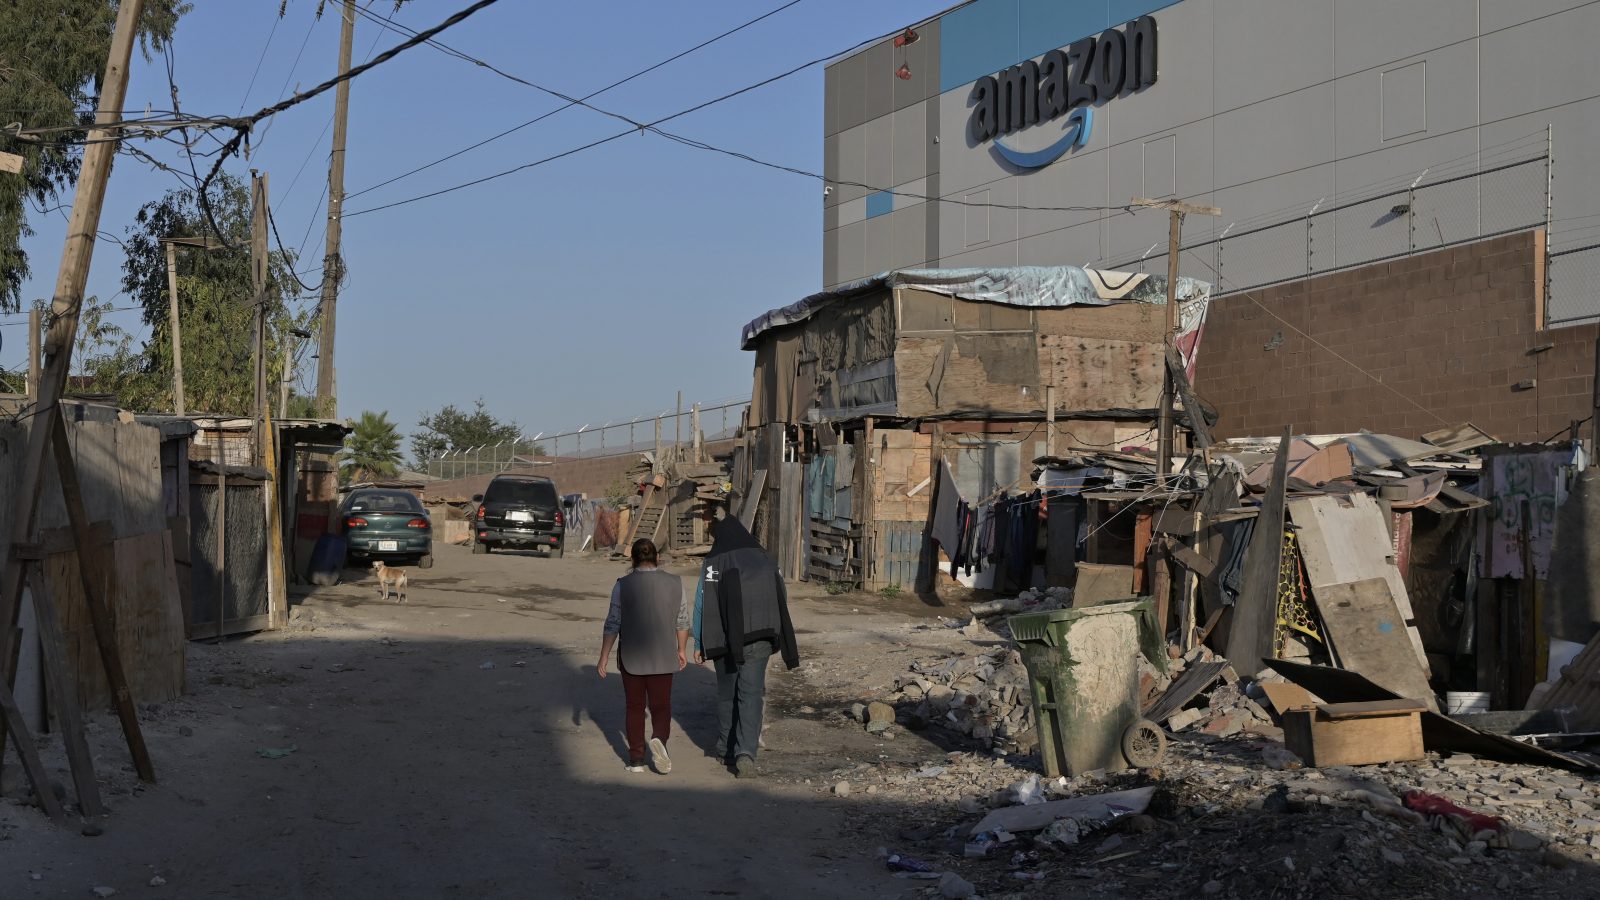 Amazon iba a ayudar un barrio de Tijuana. Nunca ocurrió